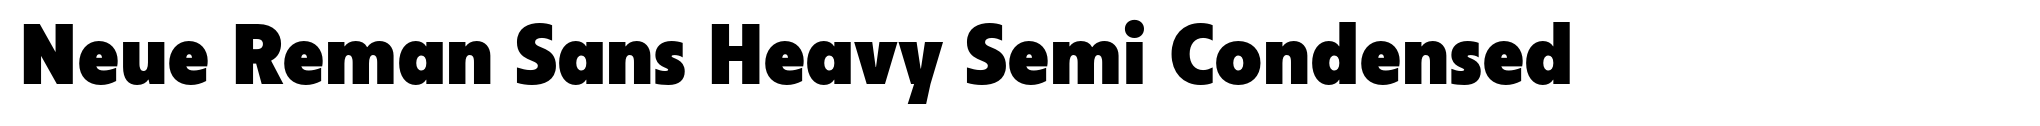 Neue Reman Sans Heavy Semi Condensed image